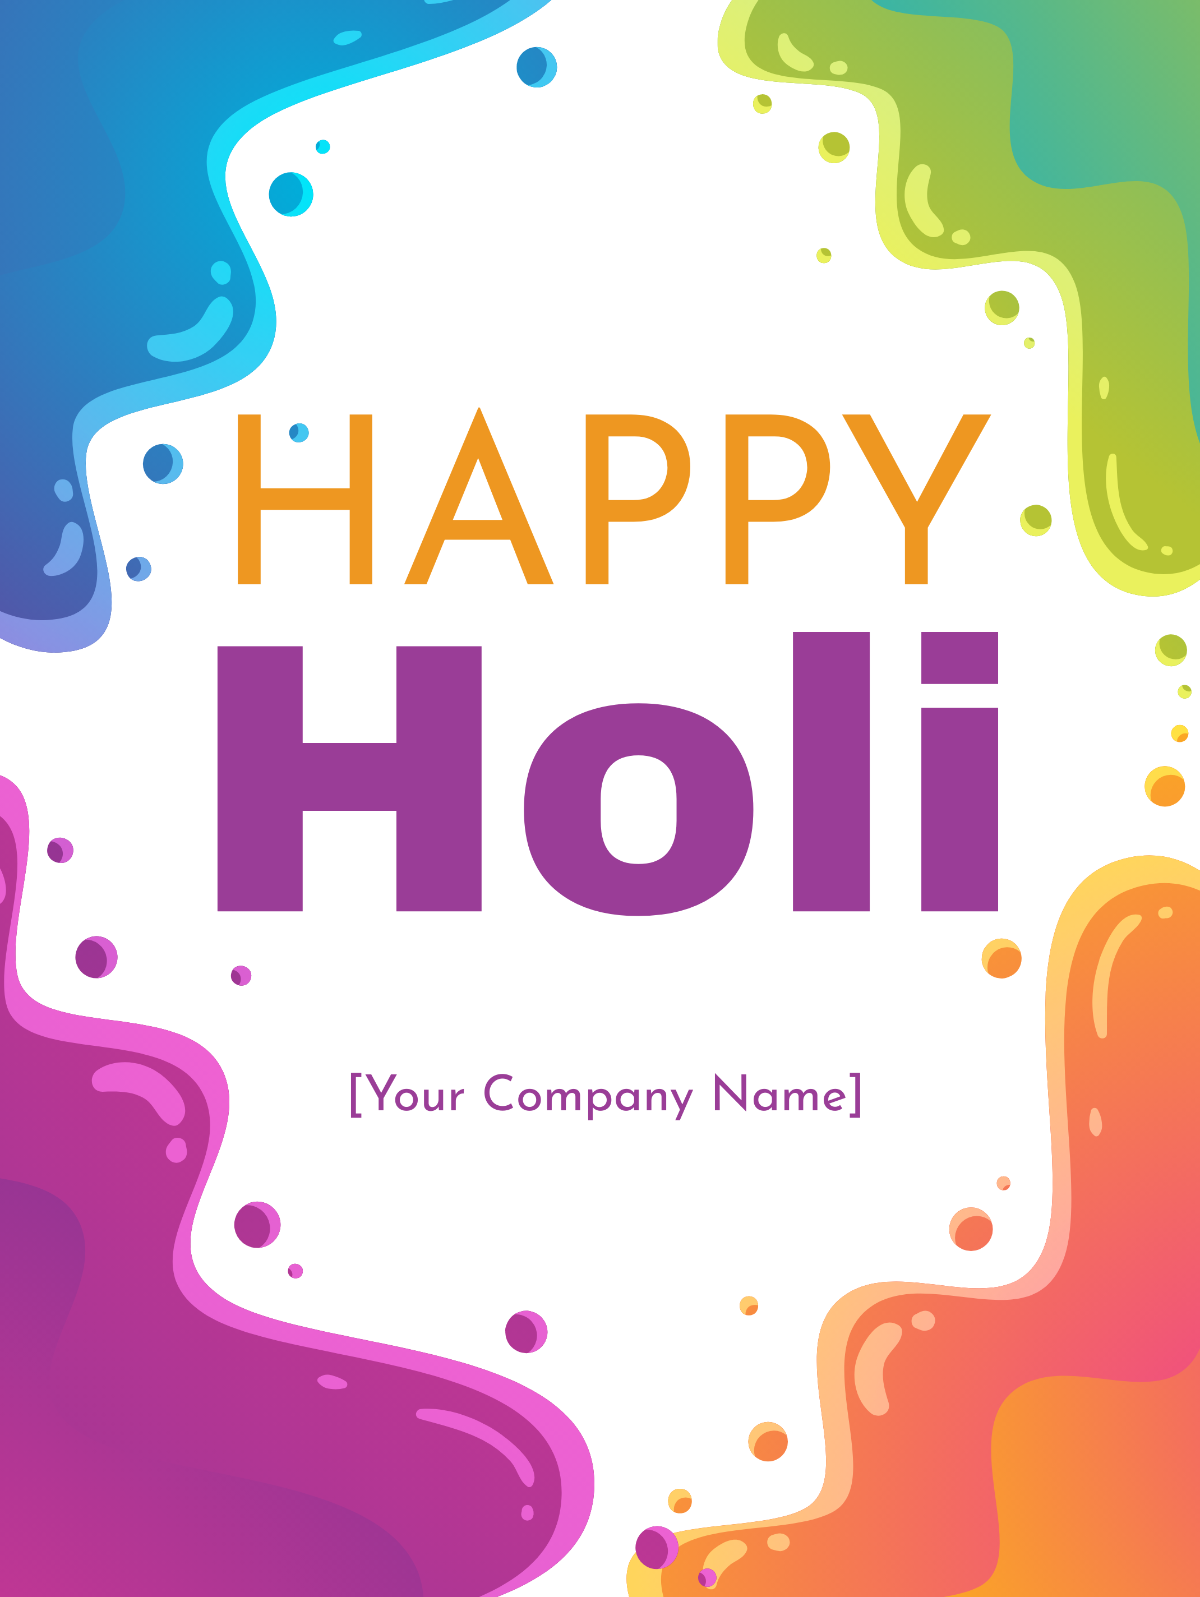 Happy Holi Threads Post